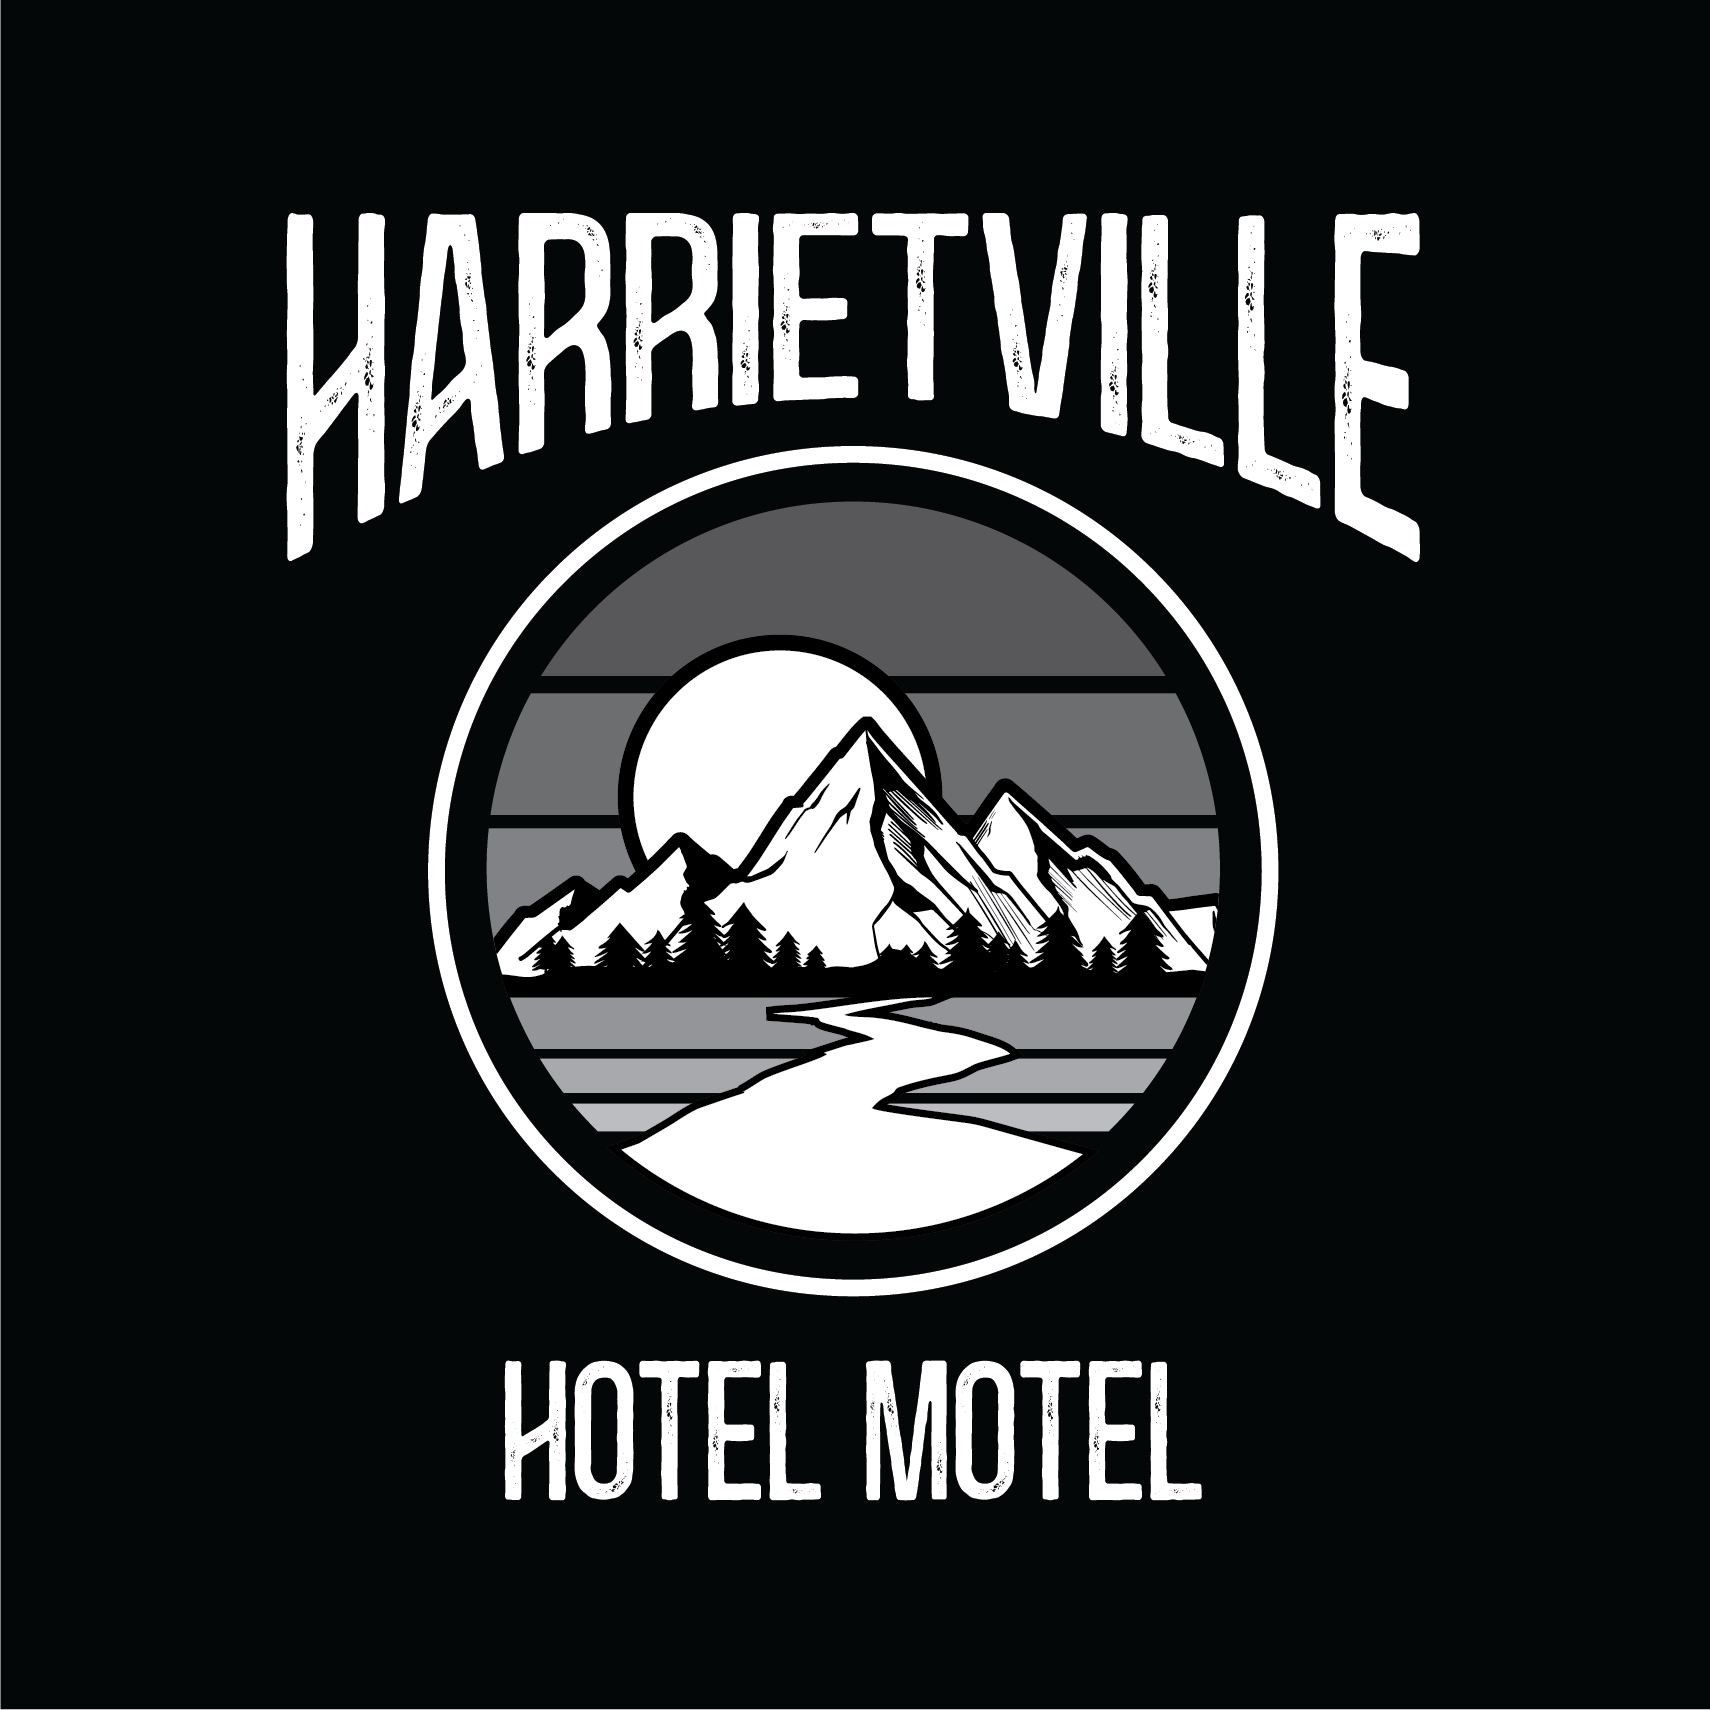 Harrietville Hotel Motel